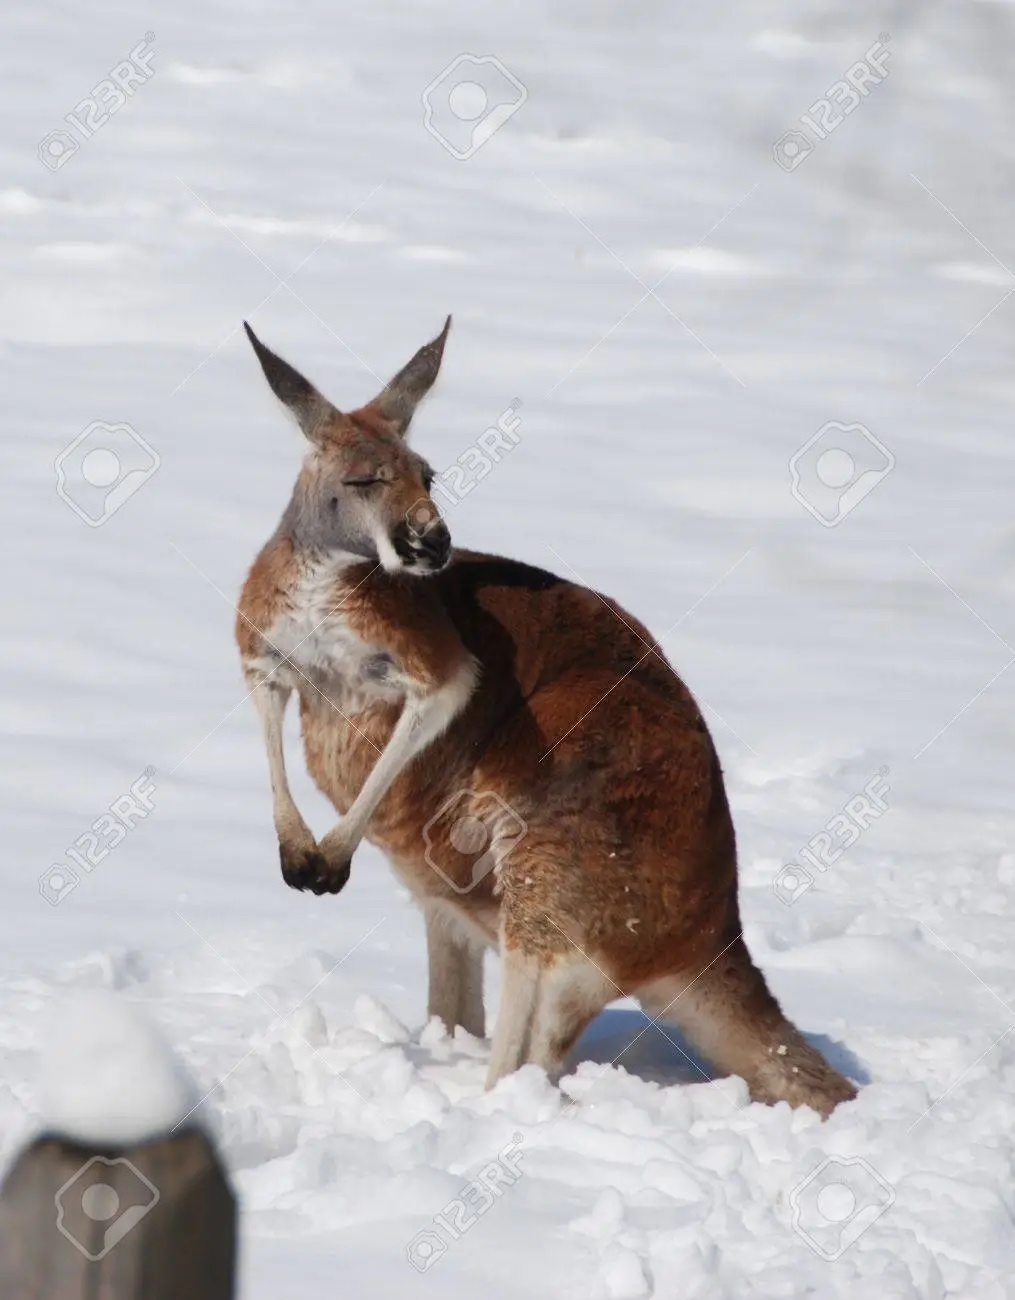 Kangaroo in the Snow